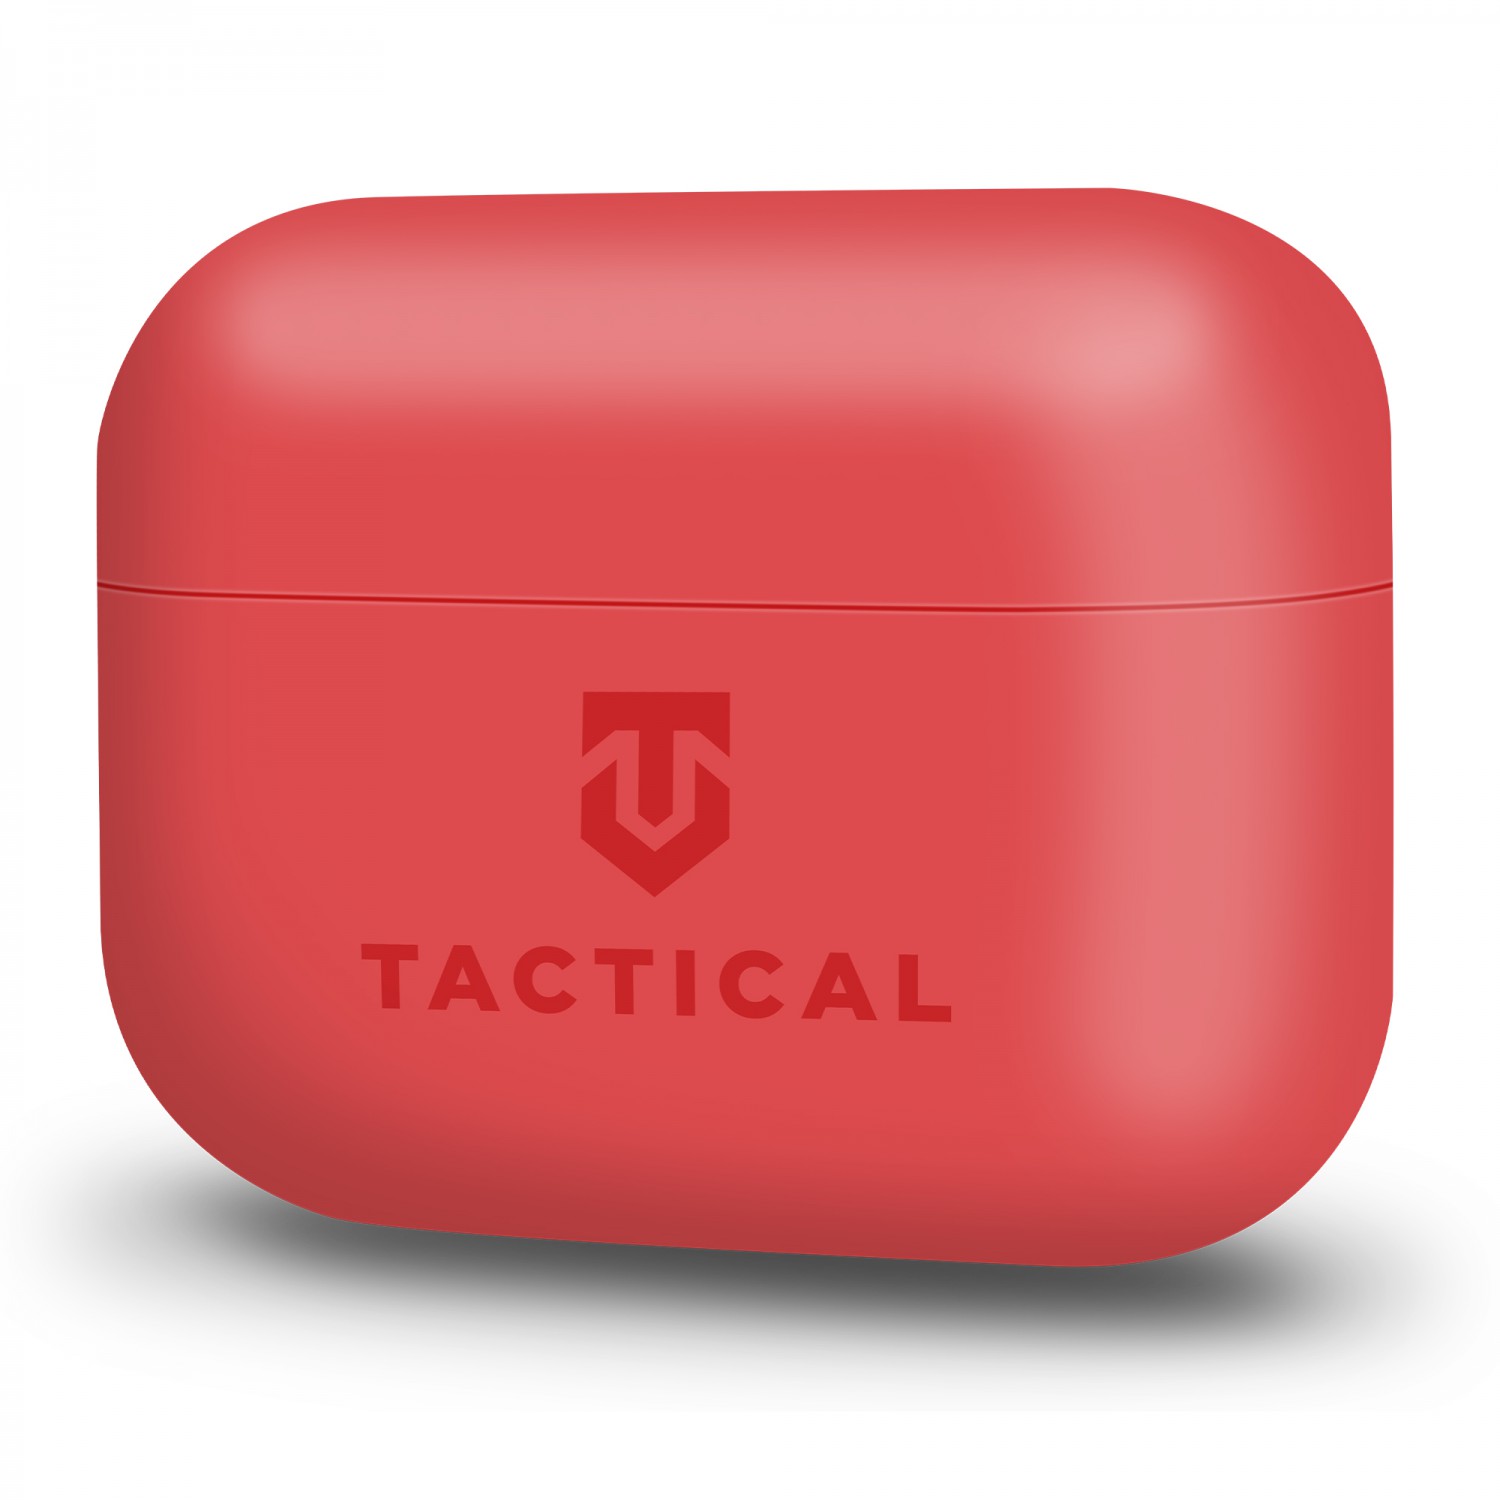 Tactical Velvet Smoothie silikonové pouzdro, obal, kryt Apple AirPods Pro chilli